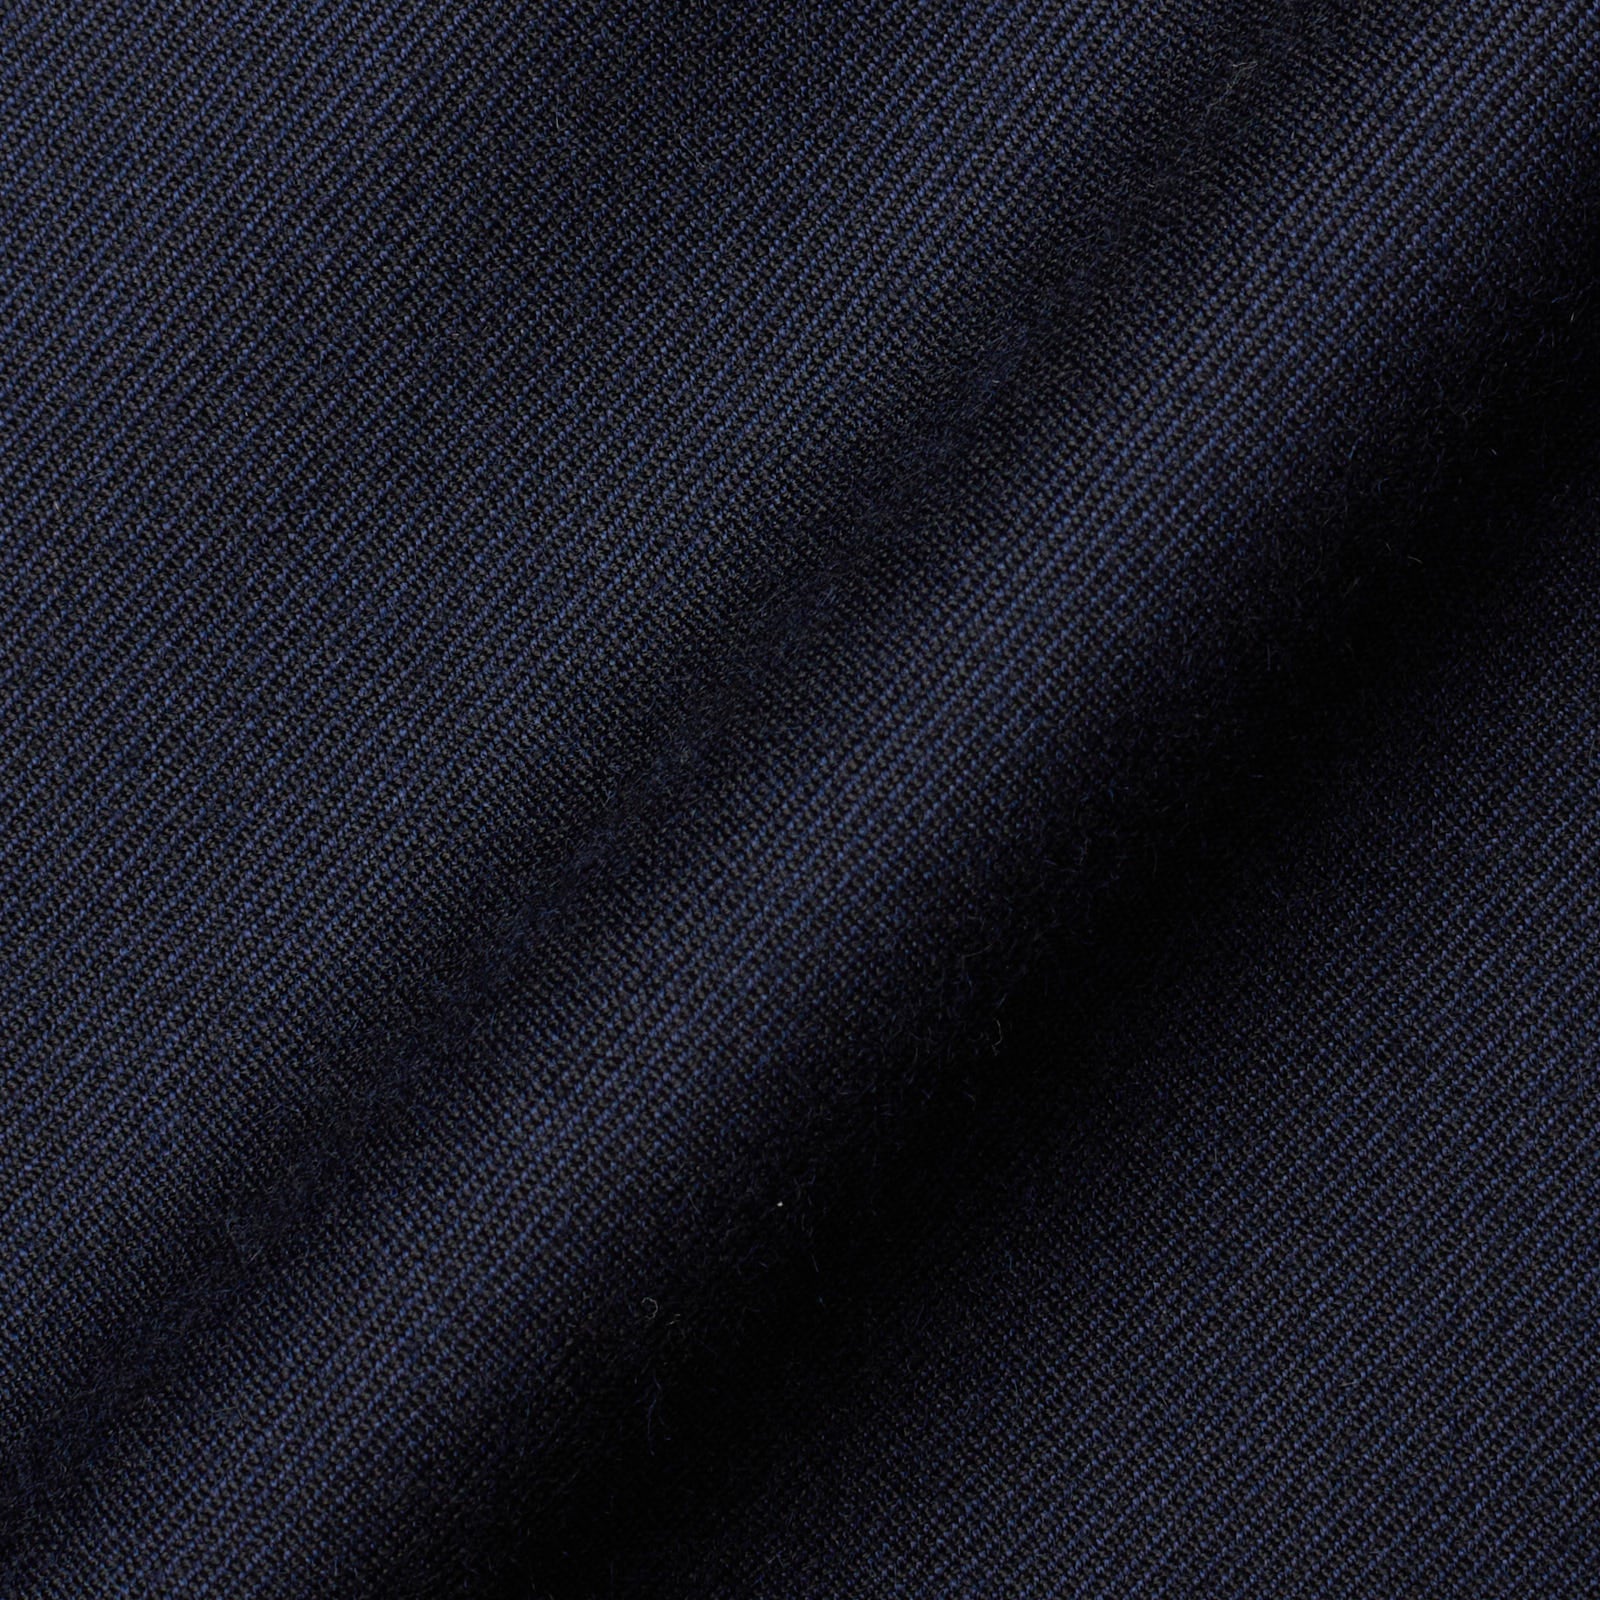 RUBINACCI LH Handmade Bespoke Blue Cashmere-Silk Jacket with Elbow Patch EU 50 US 40 RUBINACCI